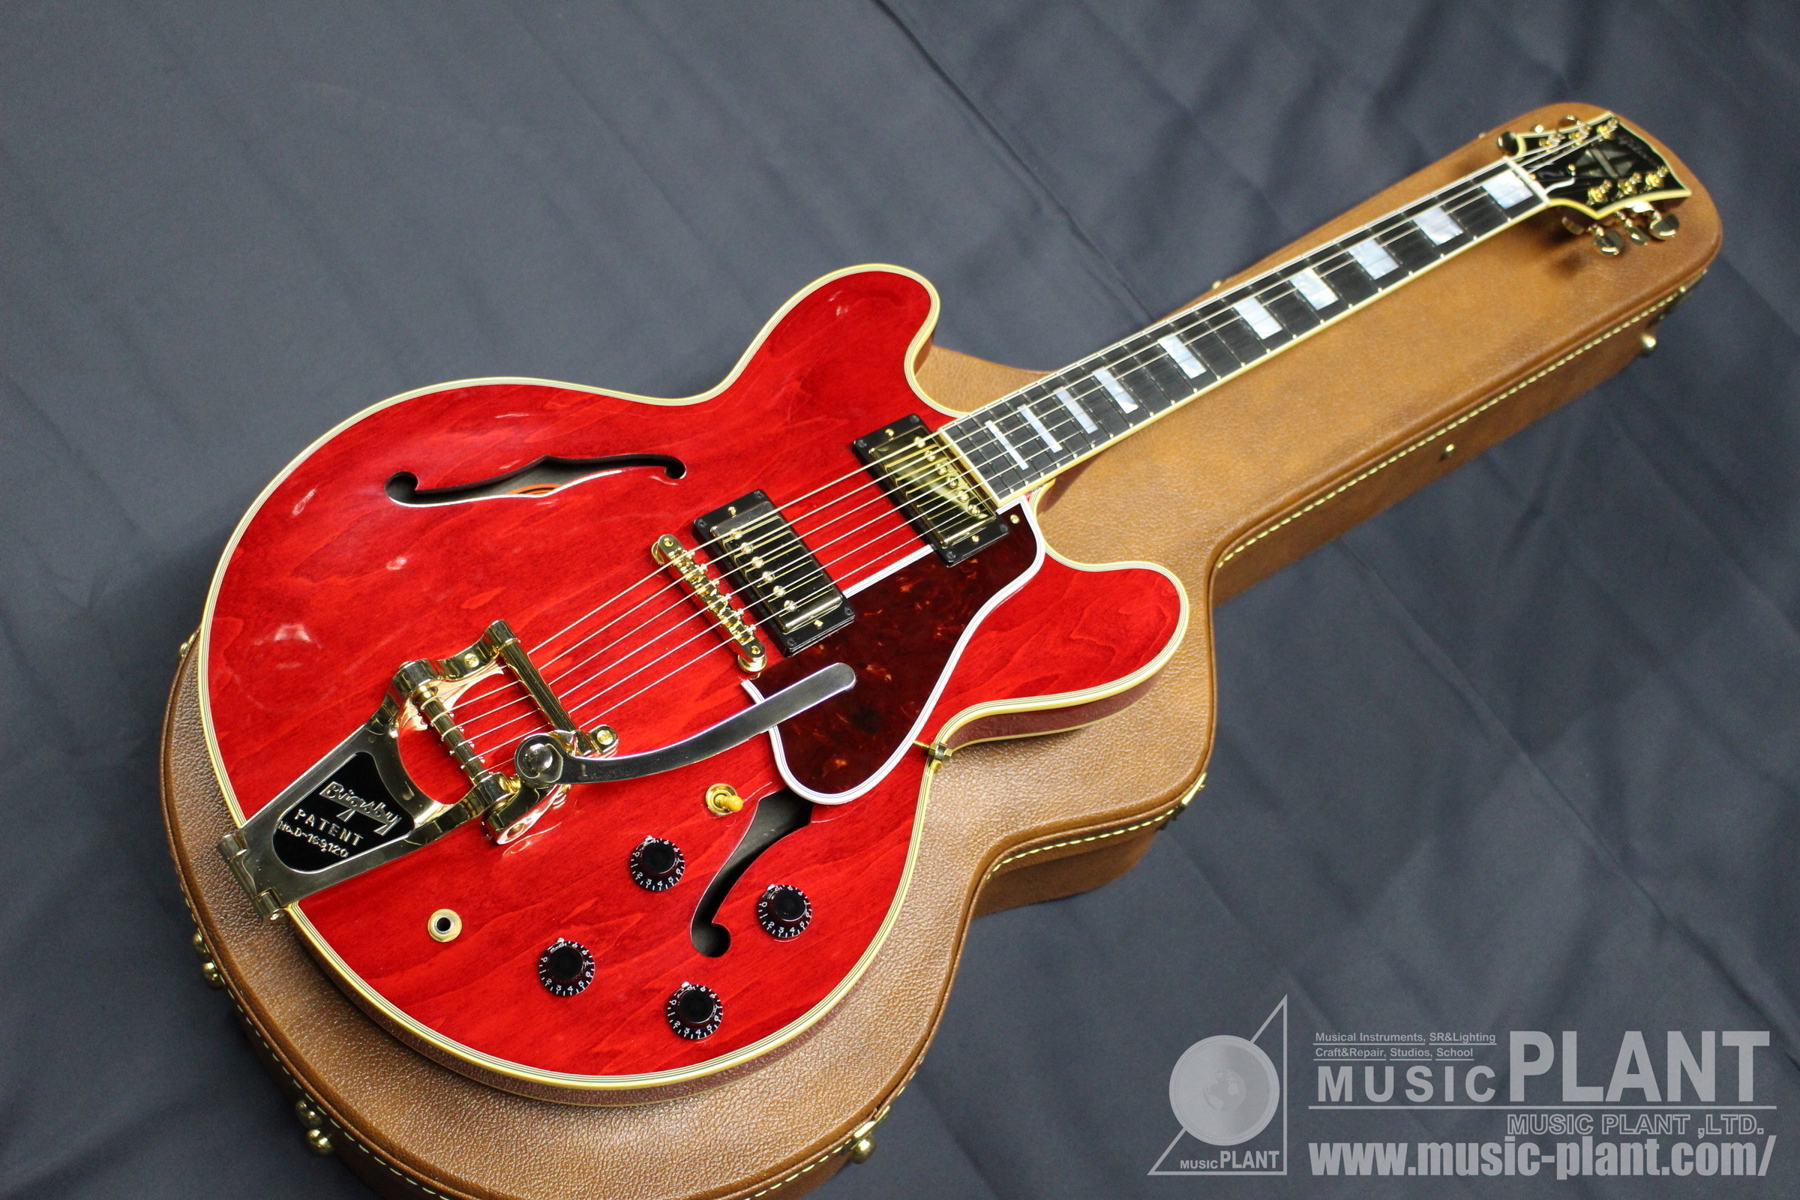 Gibson Memphis ES-355 2014年製